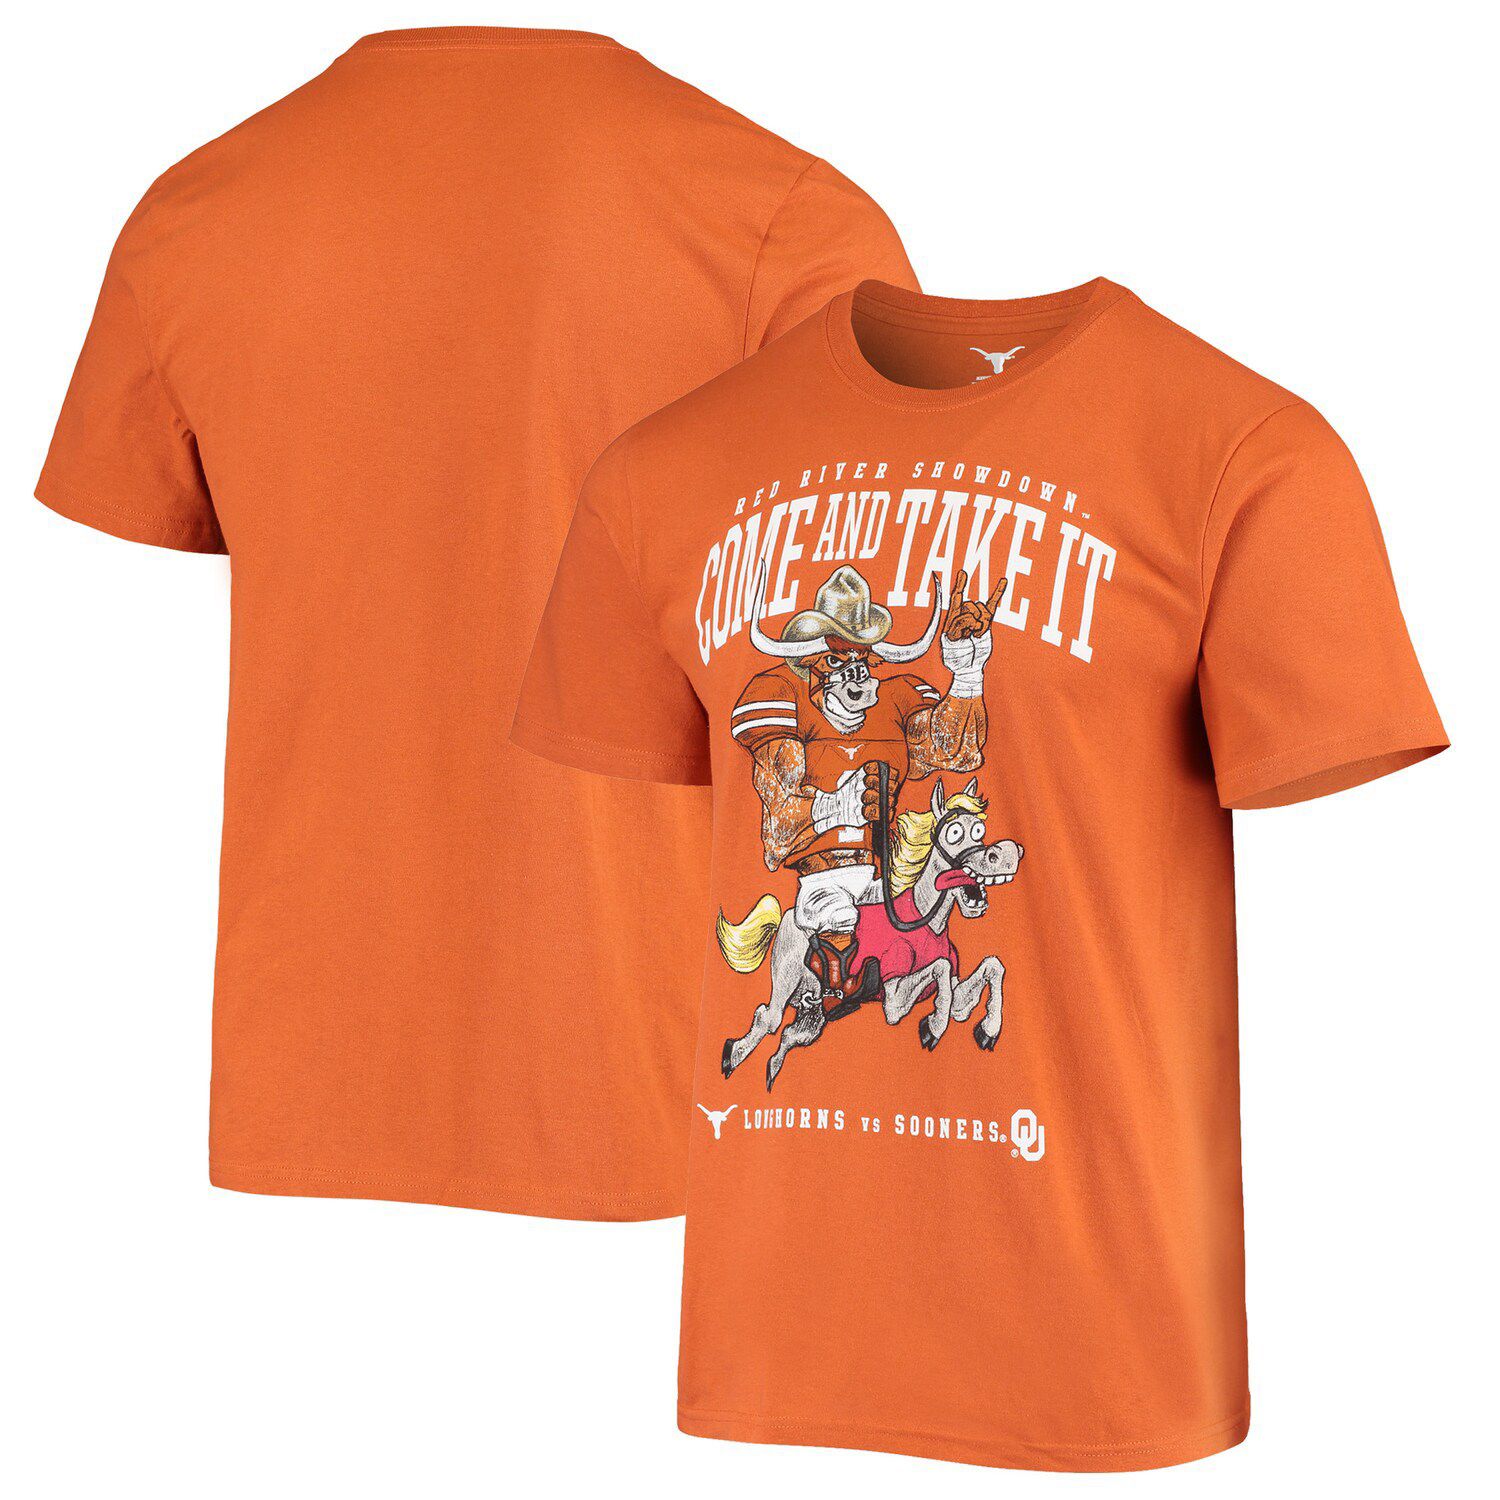 Image for Unbranded Men's Texas Orange Texas Longhorns Red River Showdown T-Shirt at Kohl's.